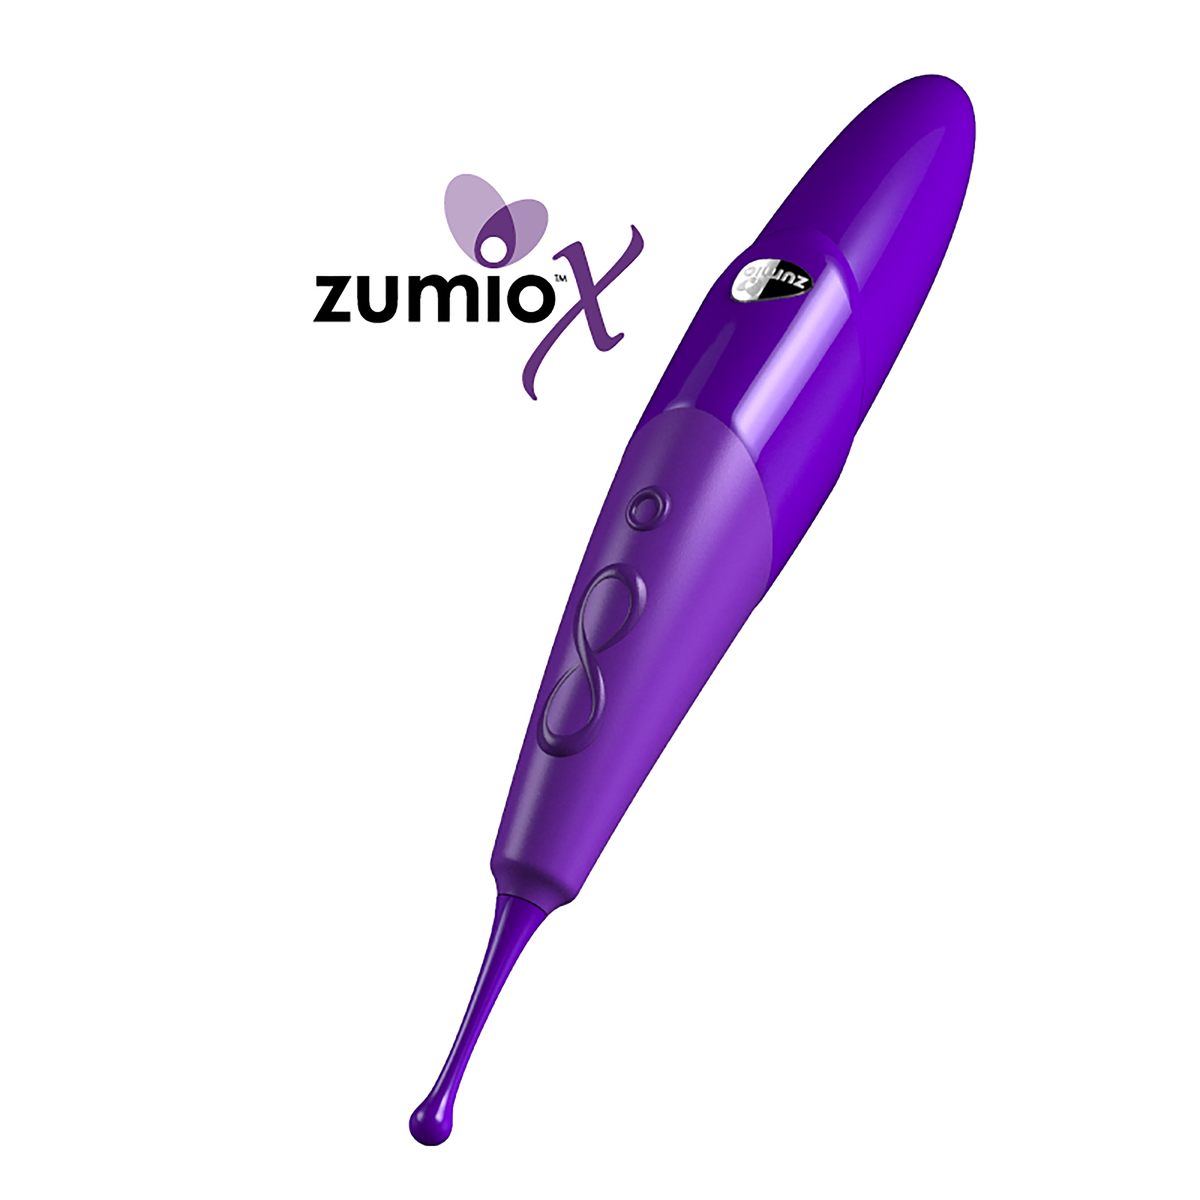 Zumio X Clitoral Stimulator Vibrator Oscillating Tip Deep USB Rechargeable